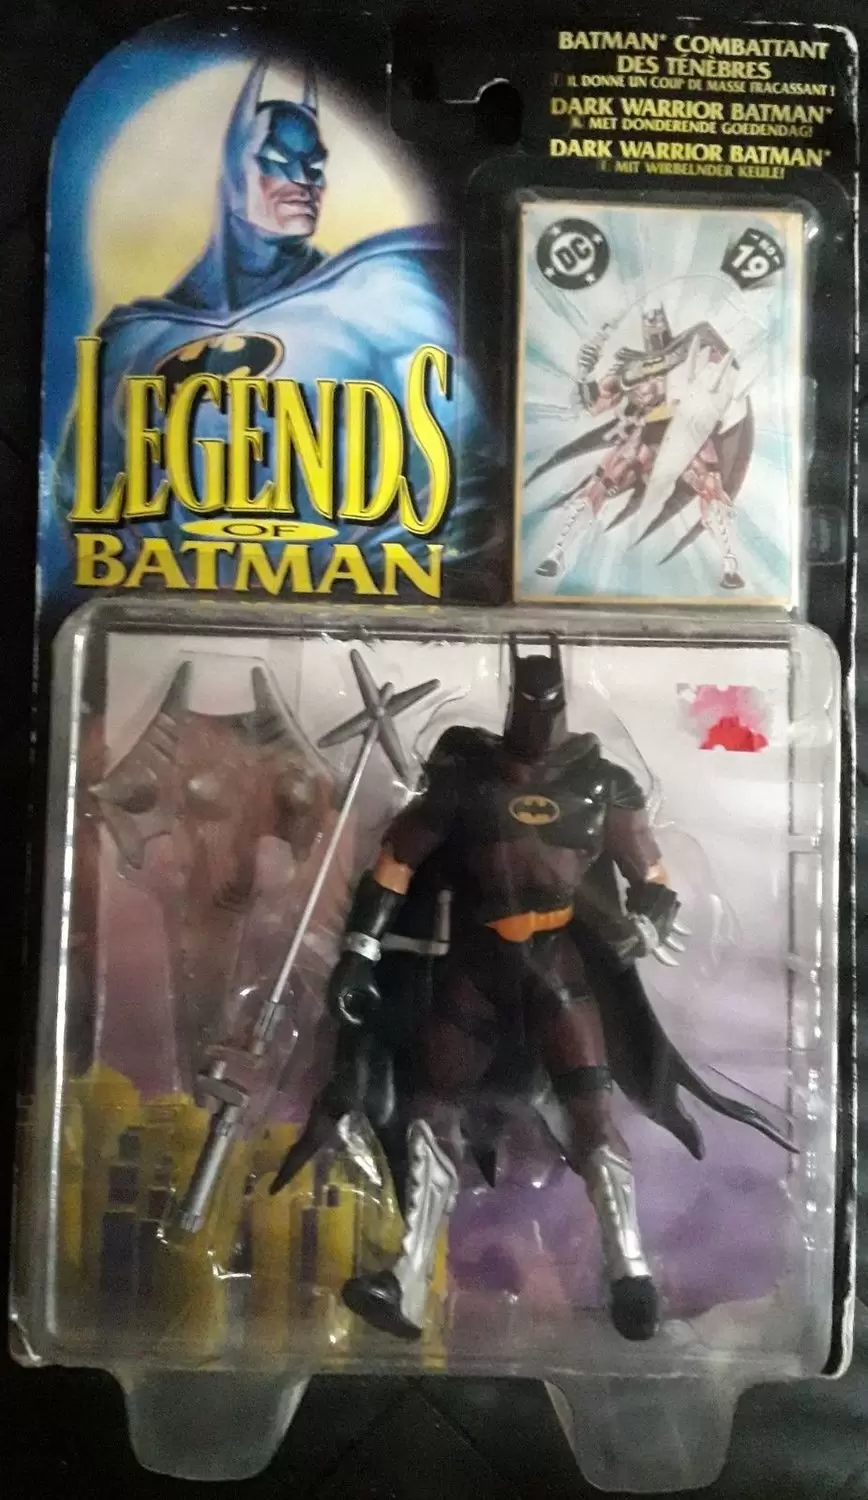 Legends of the Batman - Dark Warrior Batman